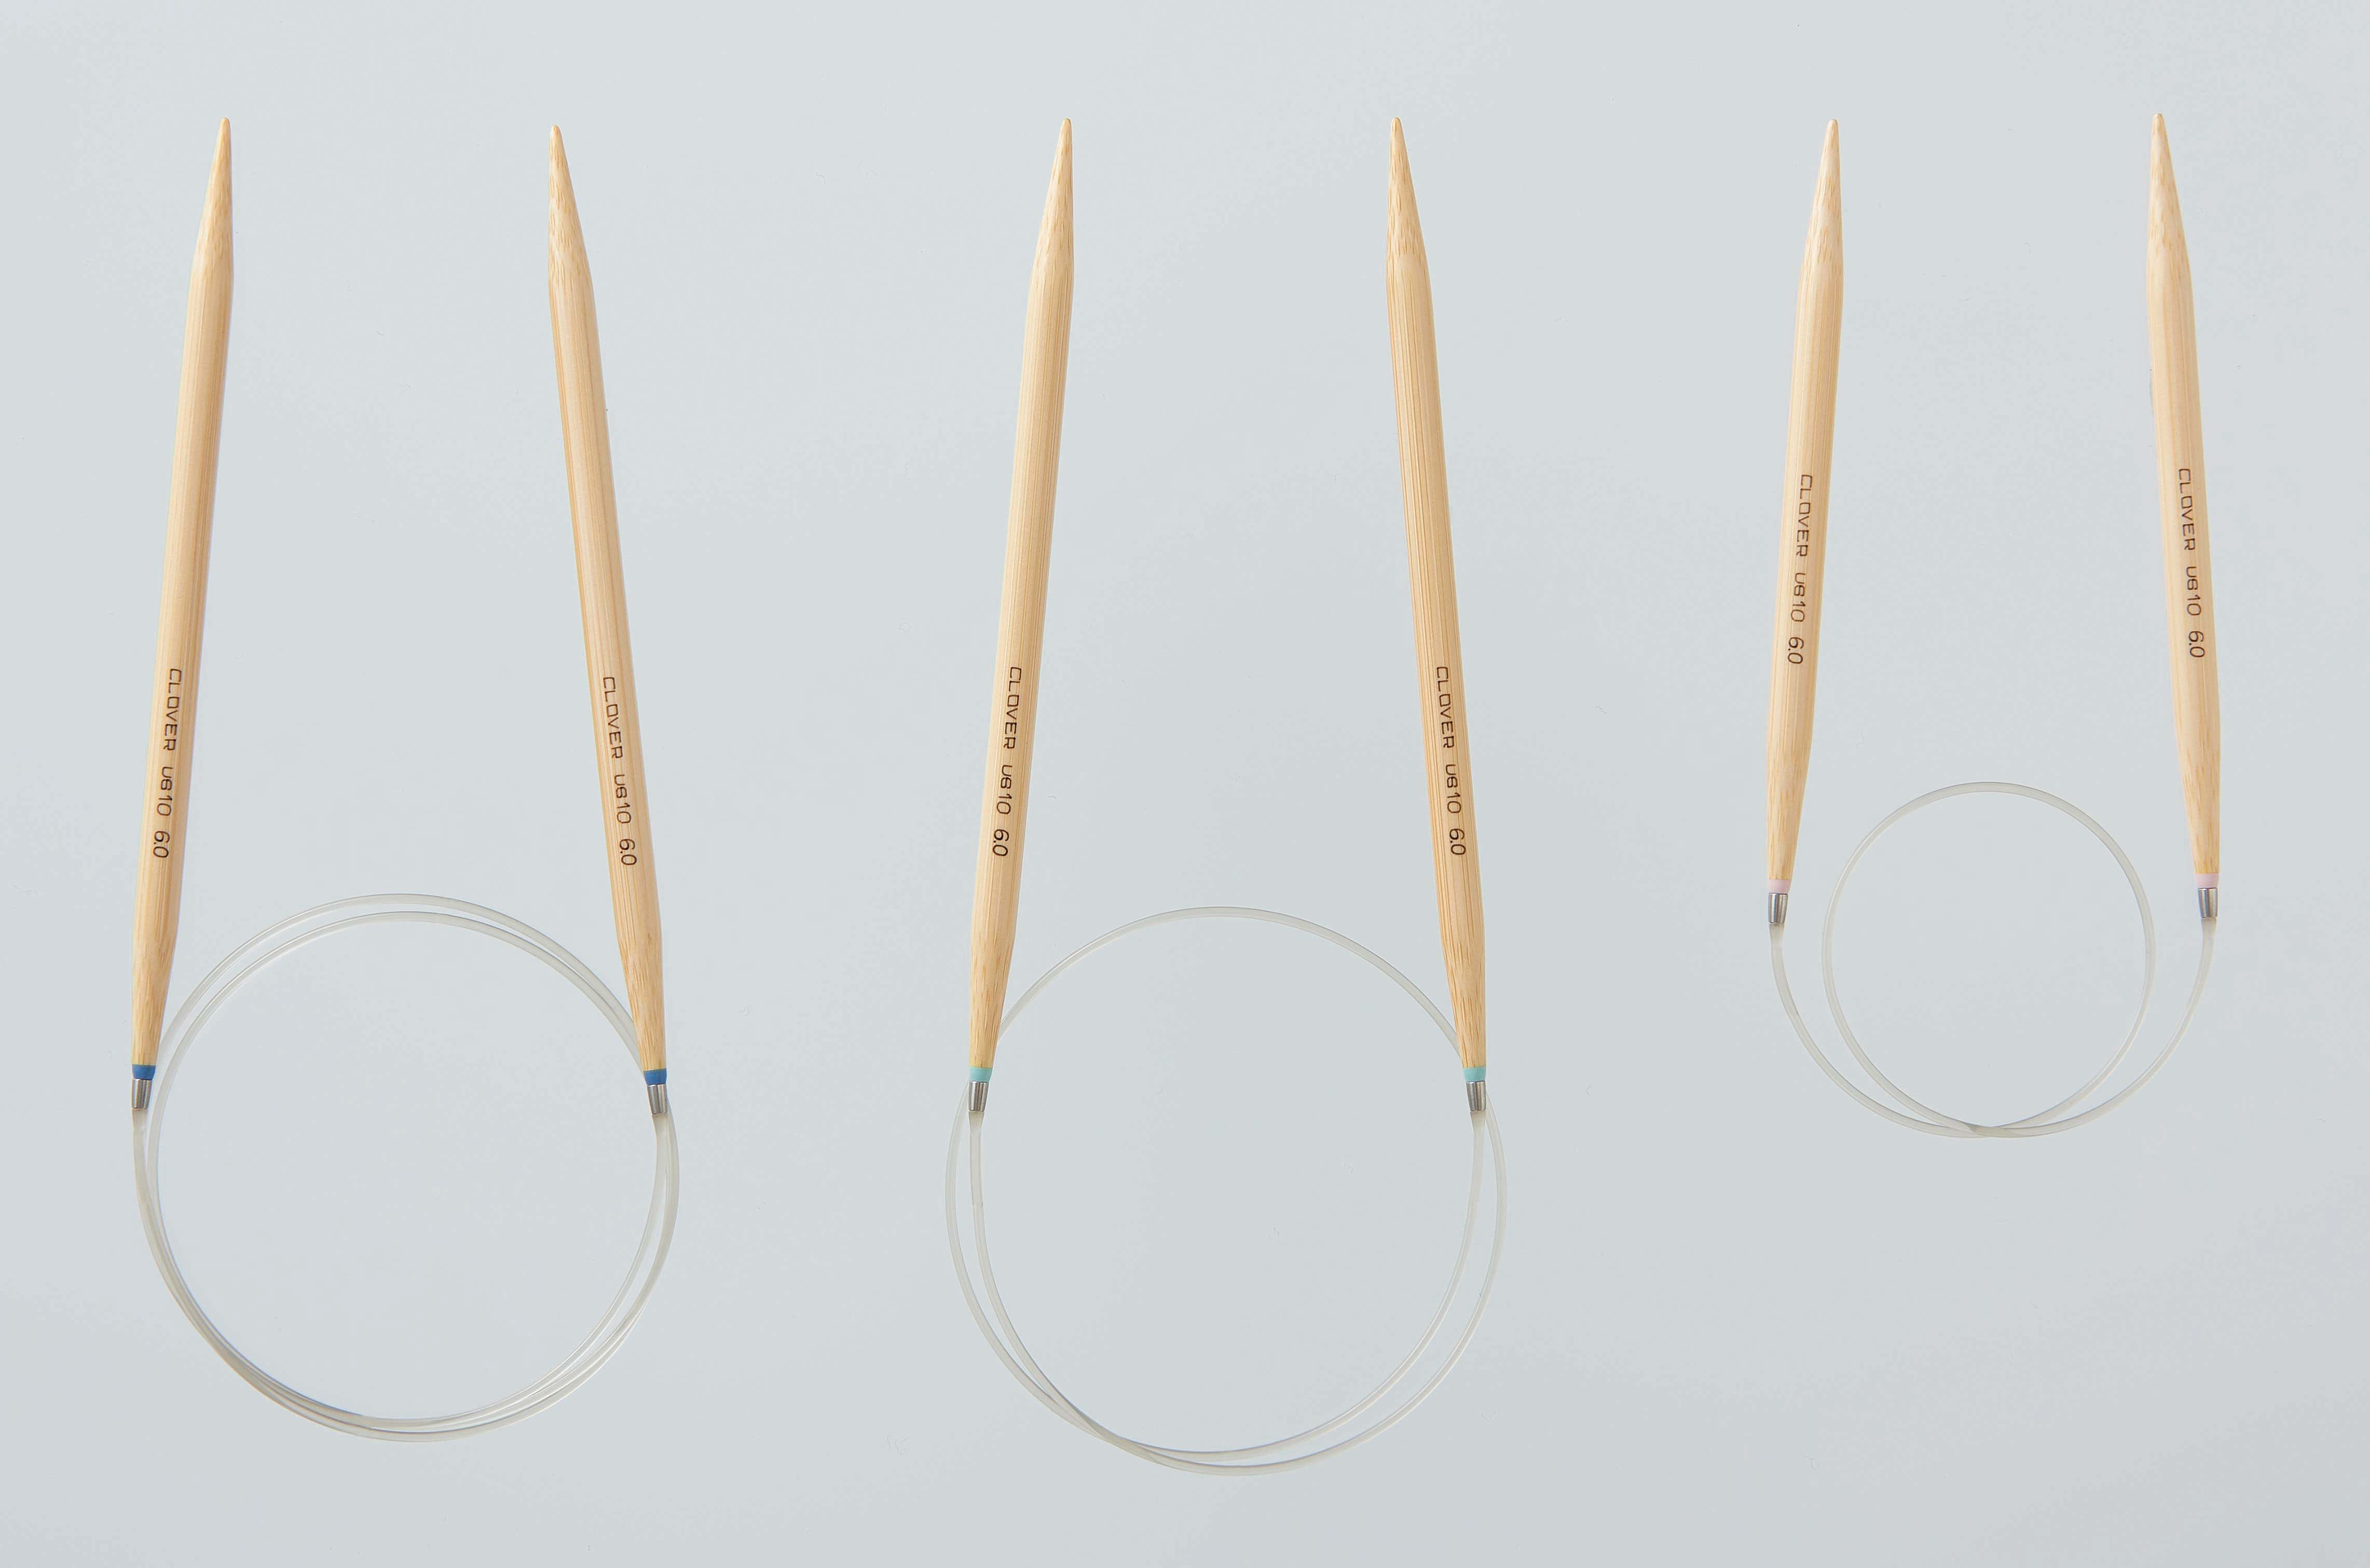 CHIAOGOO 16-Inch Bamboo Circular Knitting Needles, 7/4.5mm